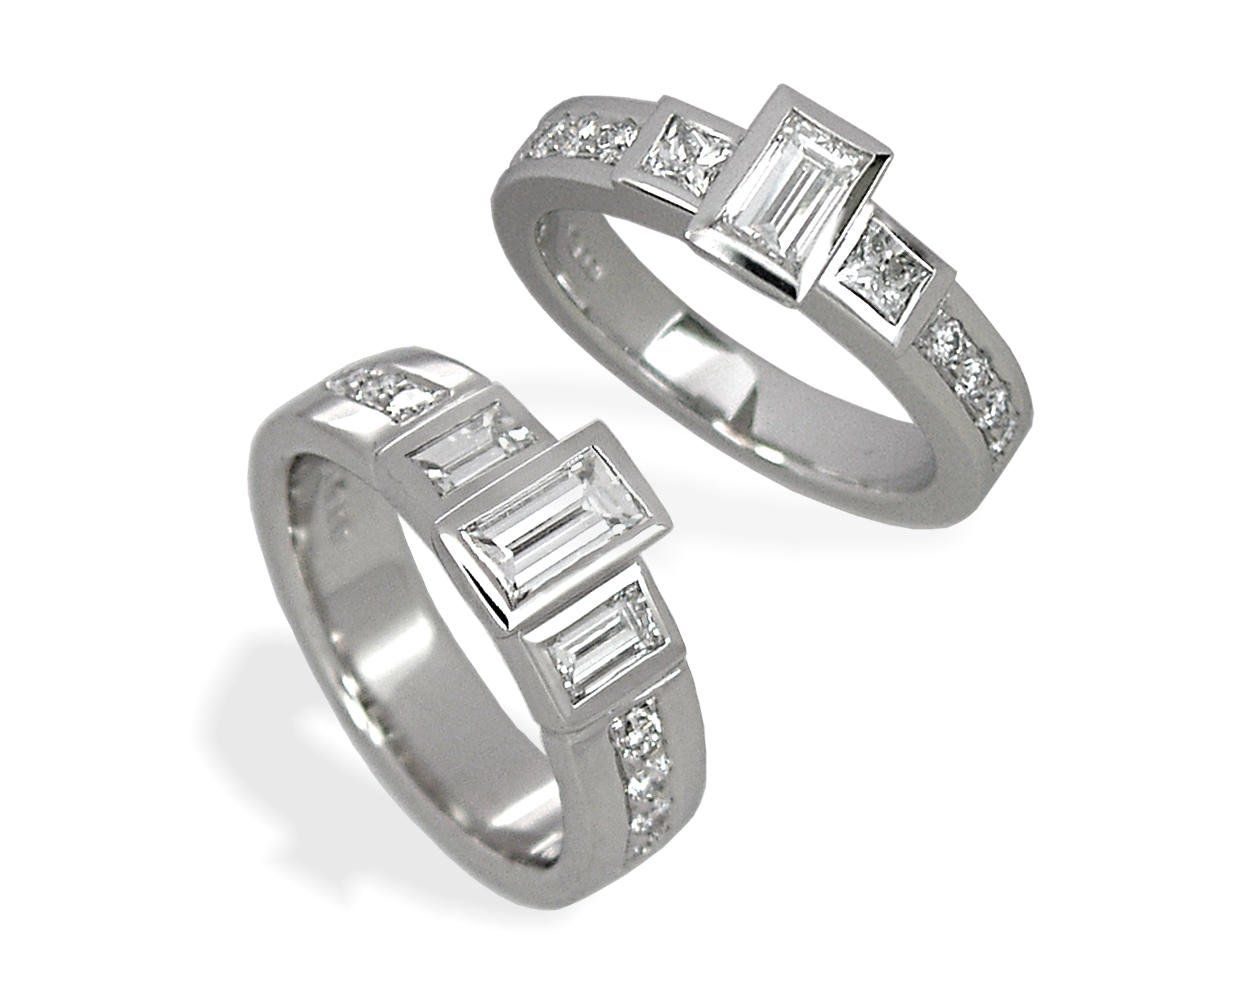 Bespoke diamond engagement rings